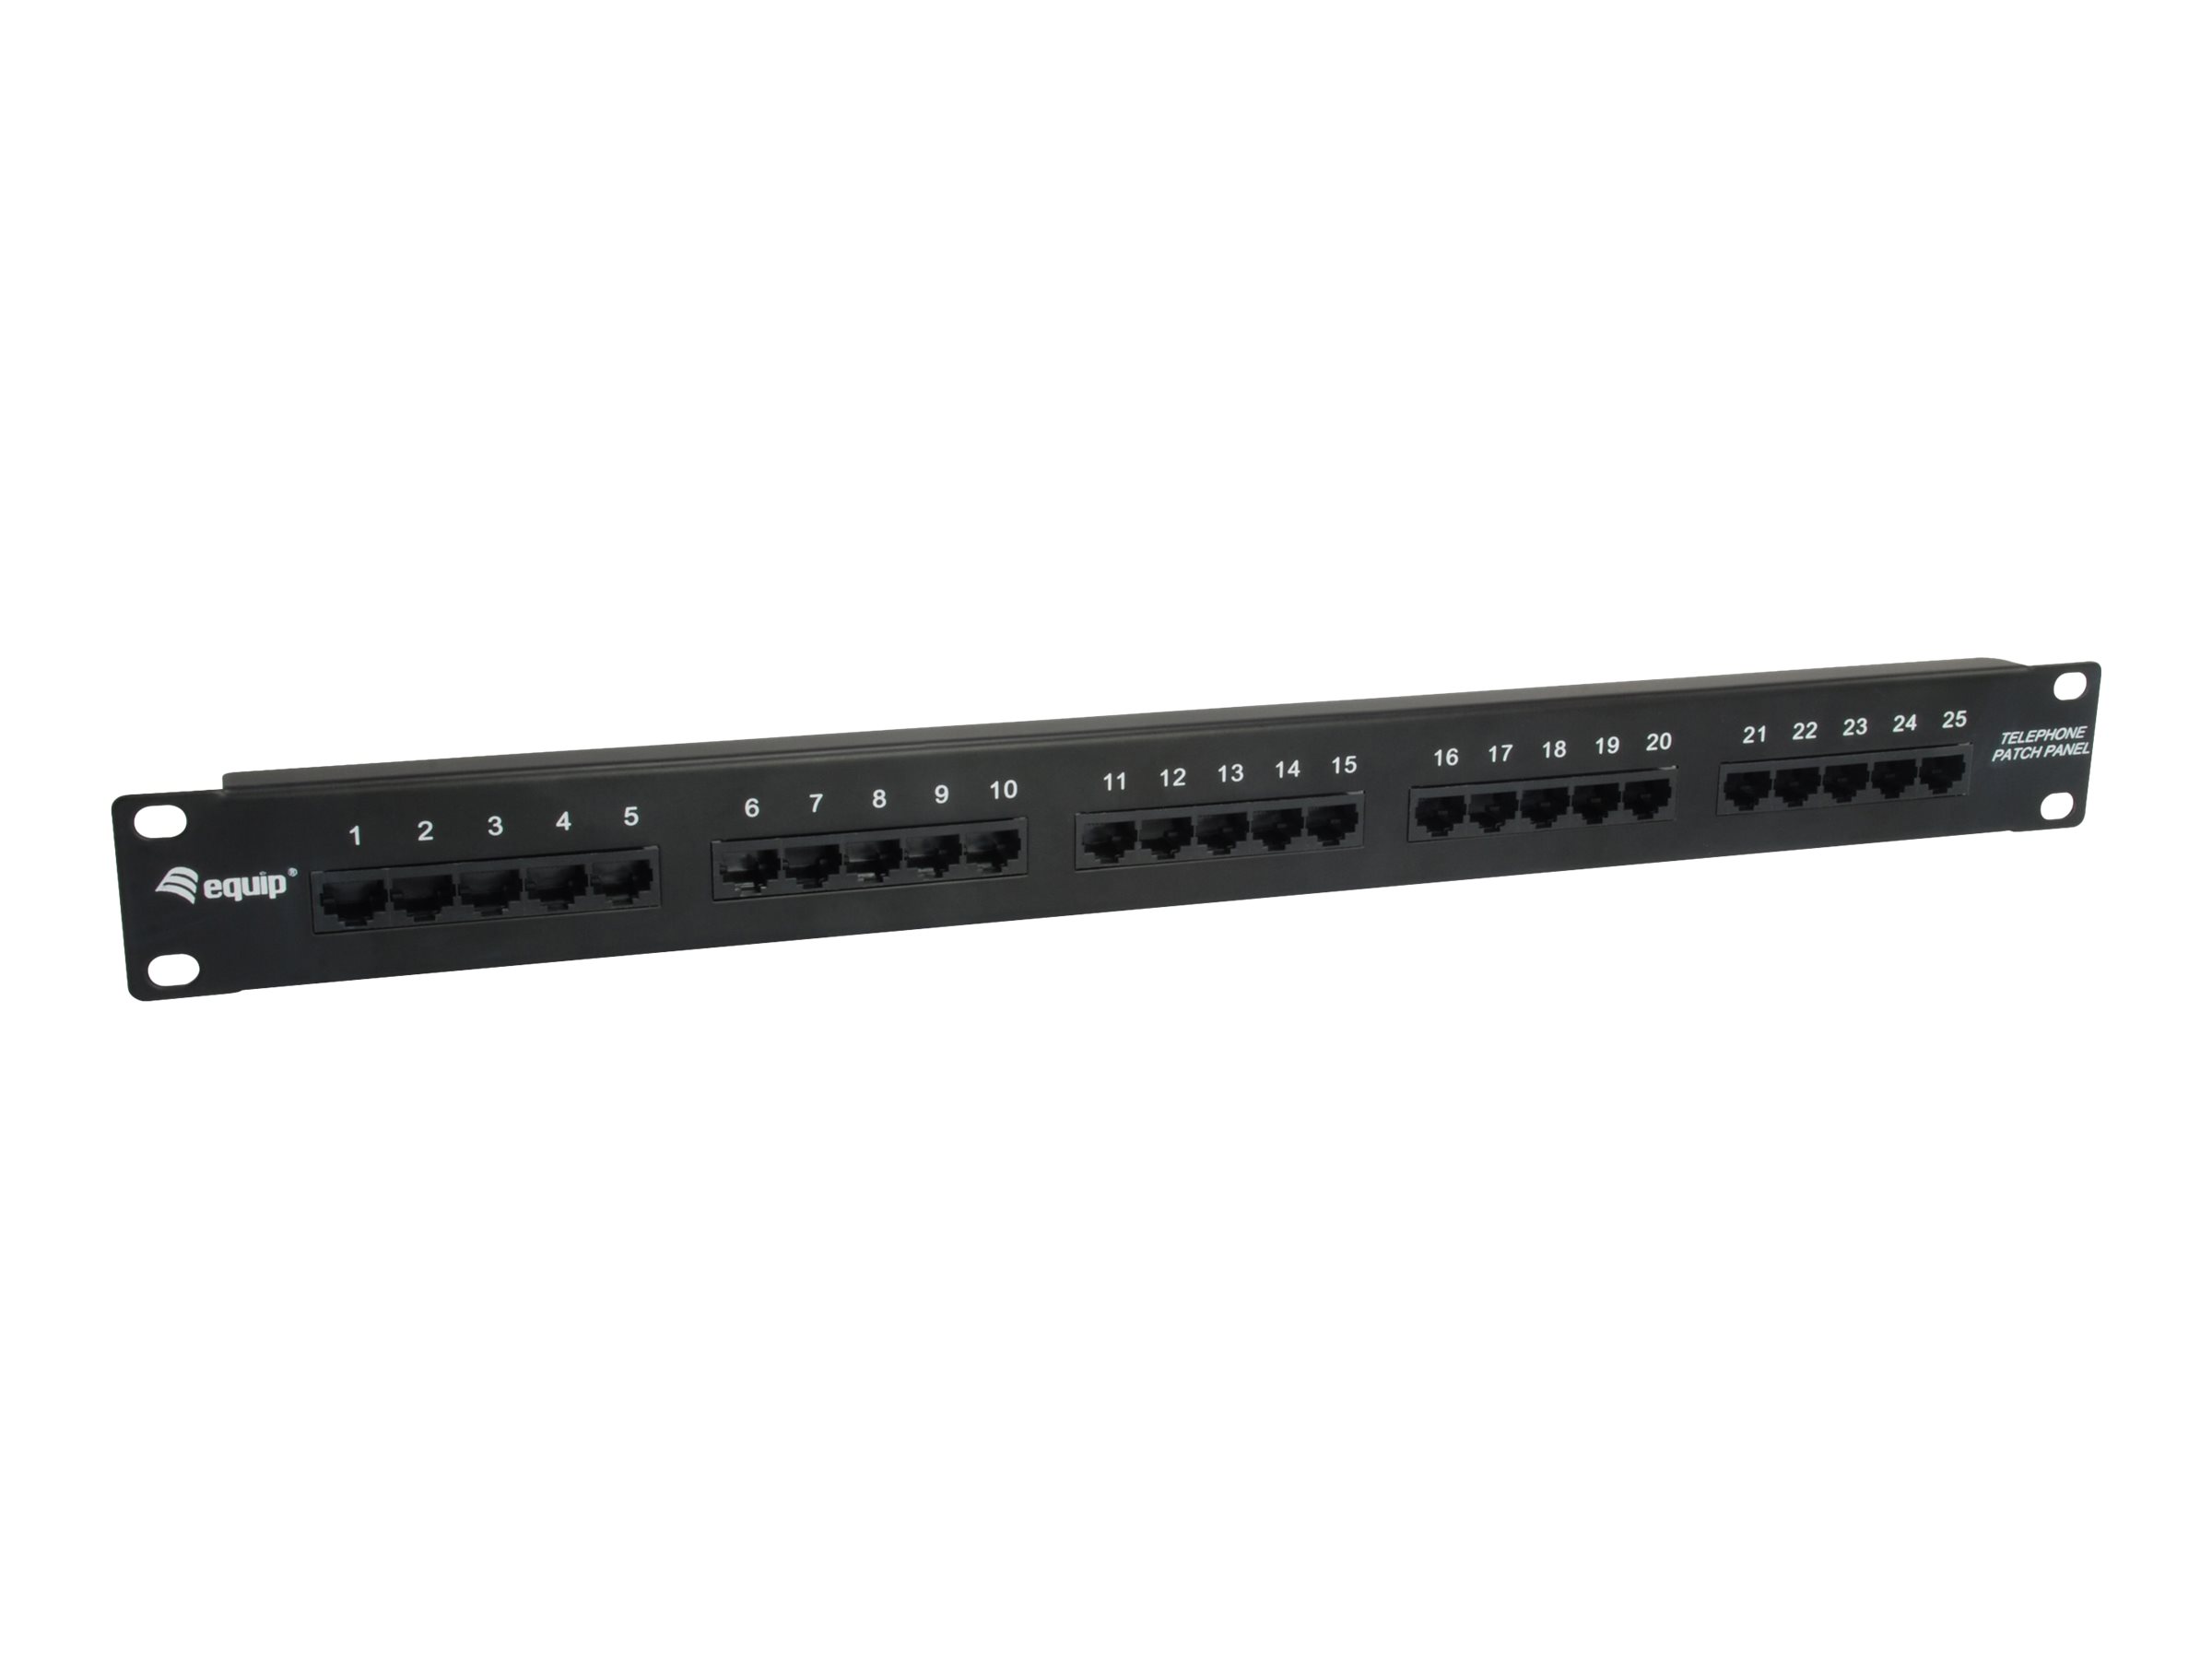 Equip Pro ISDN - Patch Panel - CAT 3 - RJ-45 X 25 - Schwarz - 1U - 48.3 cm (19 in)